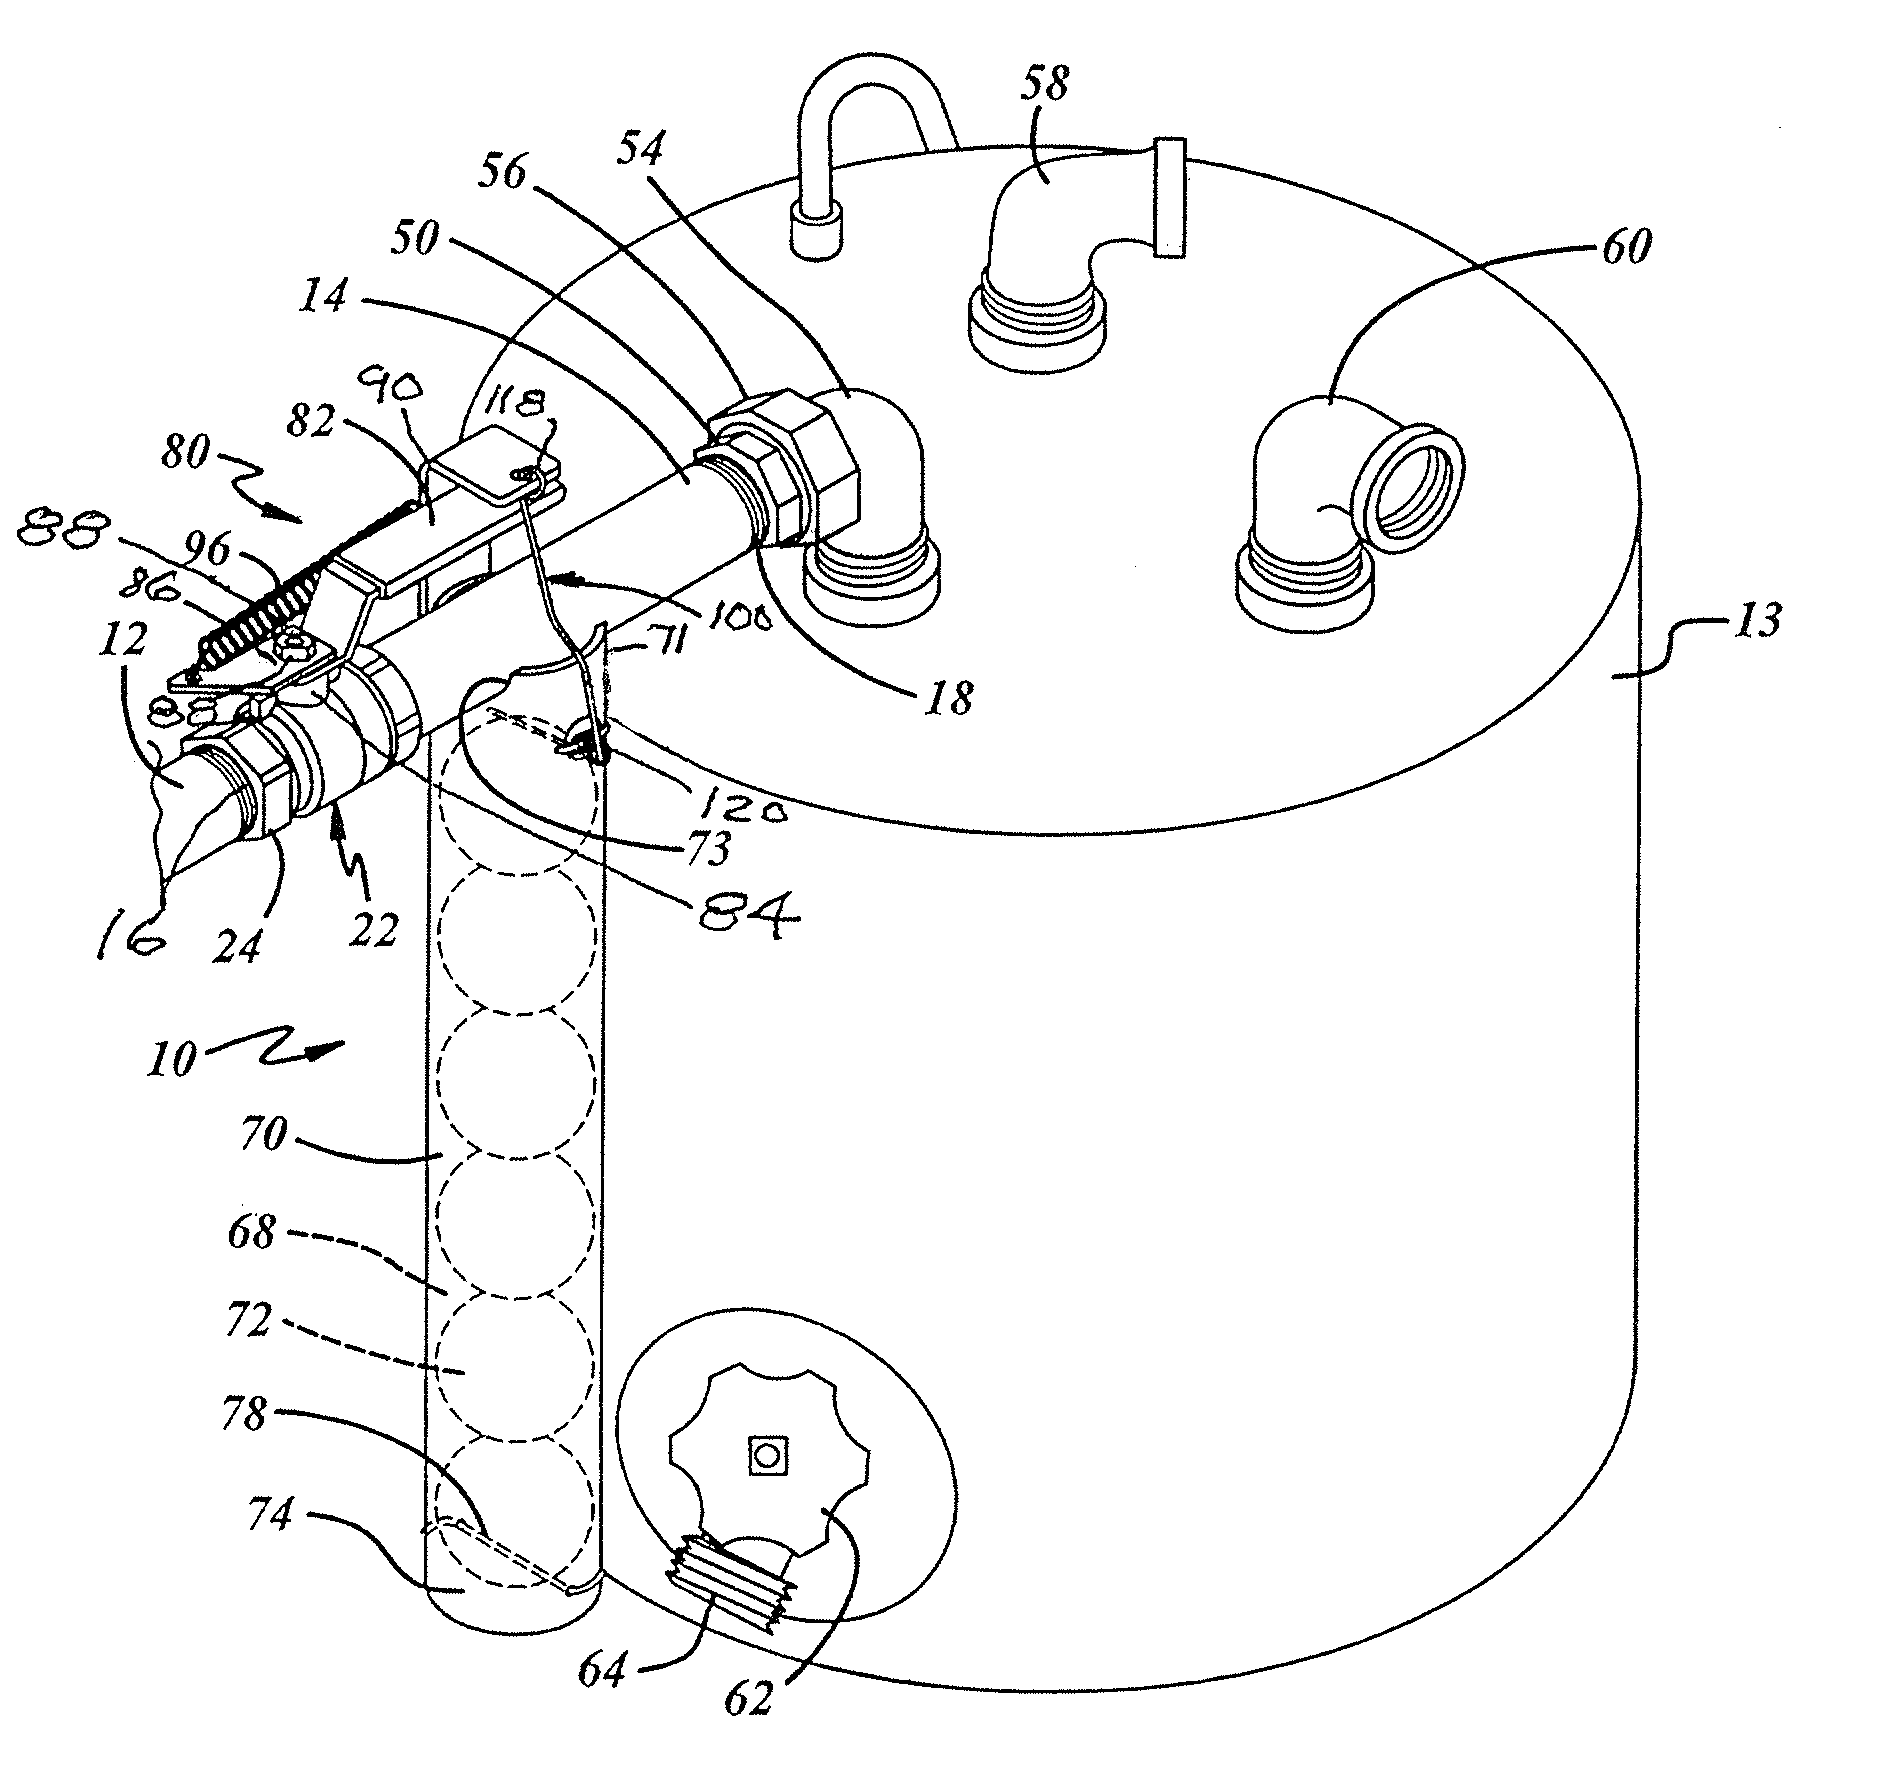 Float control fluid shut off valve mechanism